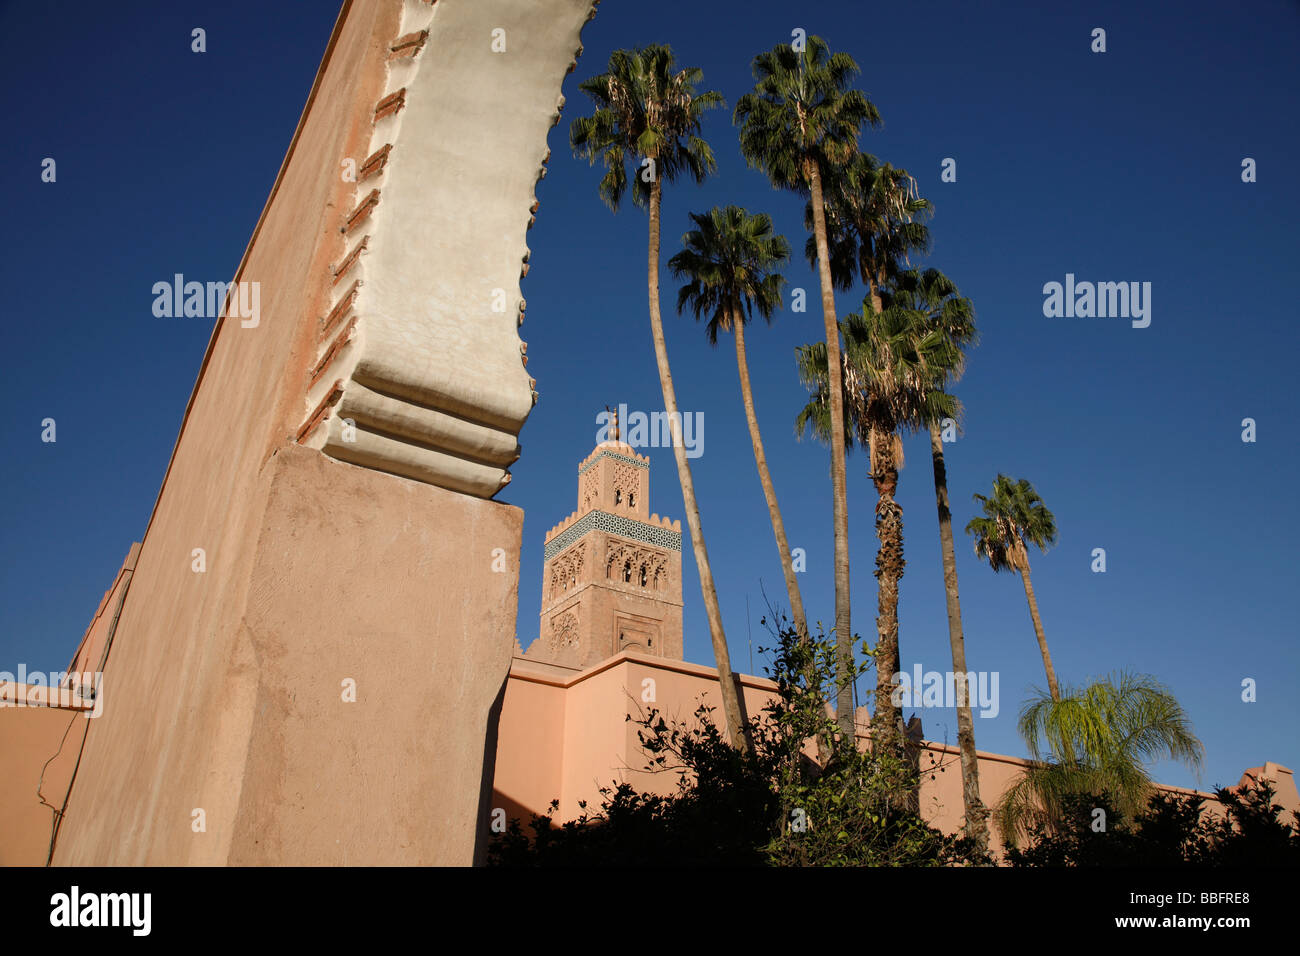 Africa, North Africa, Morocco, Marrakech, Medina, Koutoubia Mosque, Minaret Stock Photo